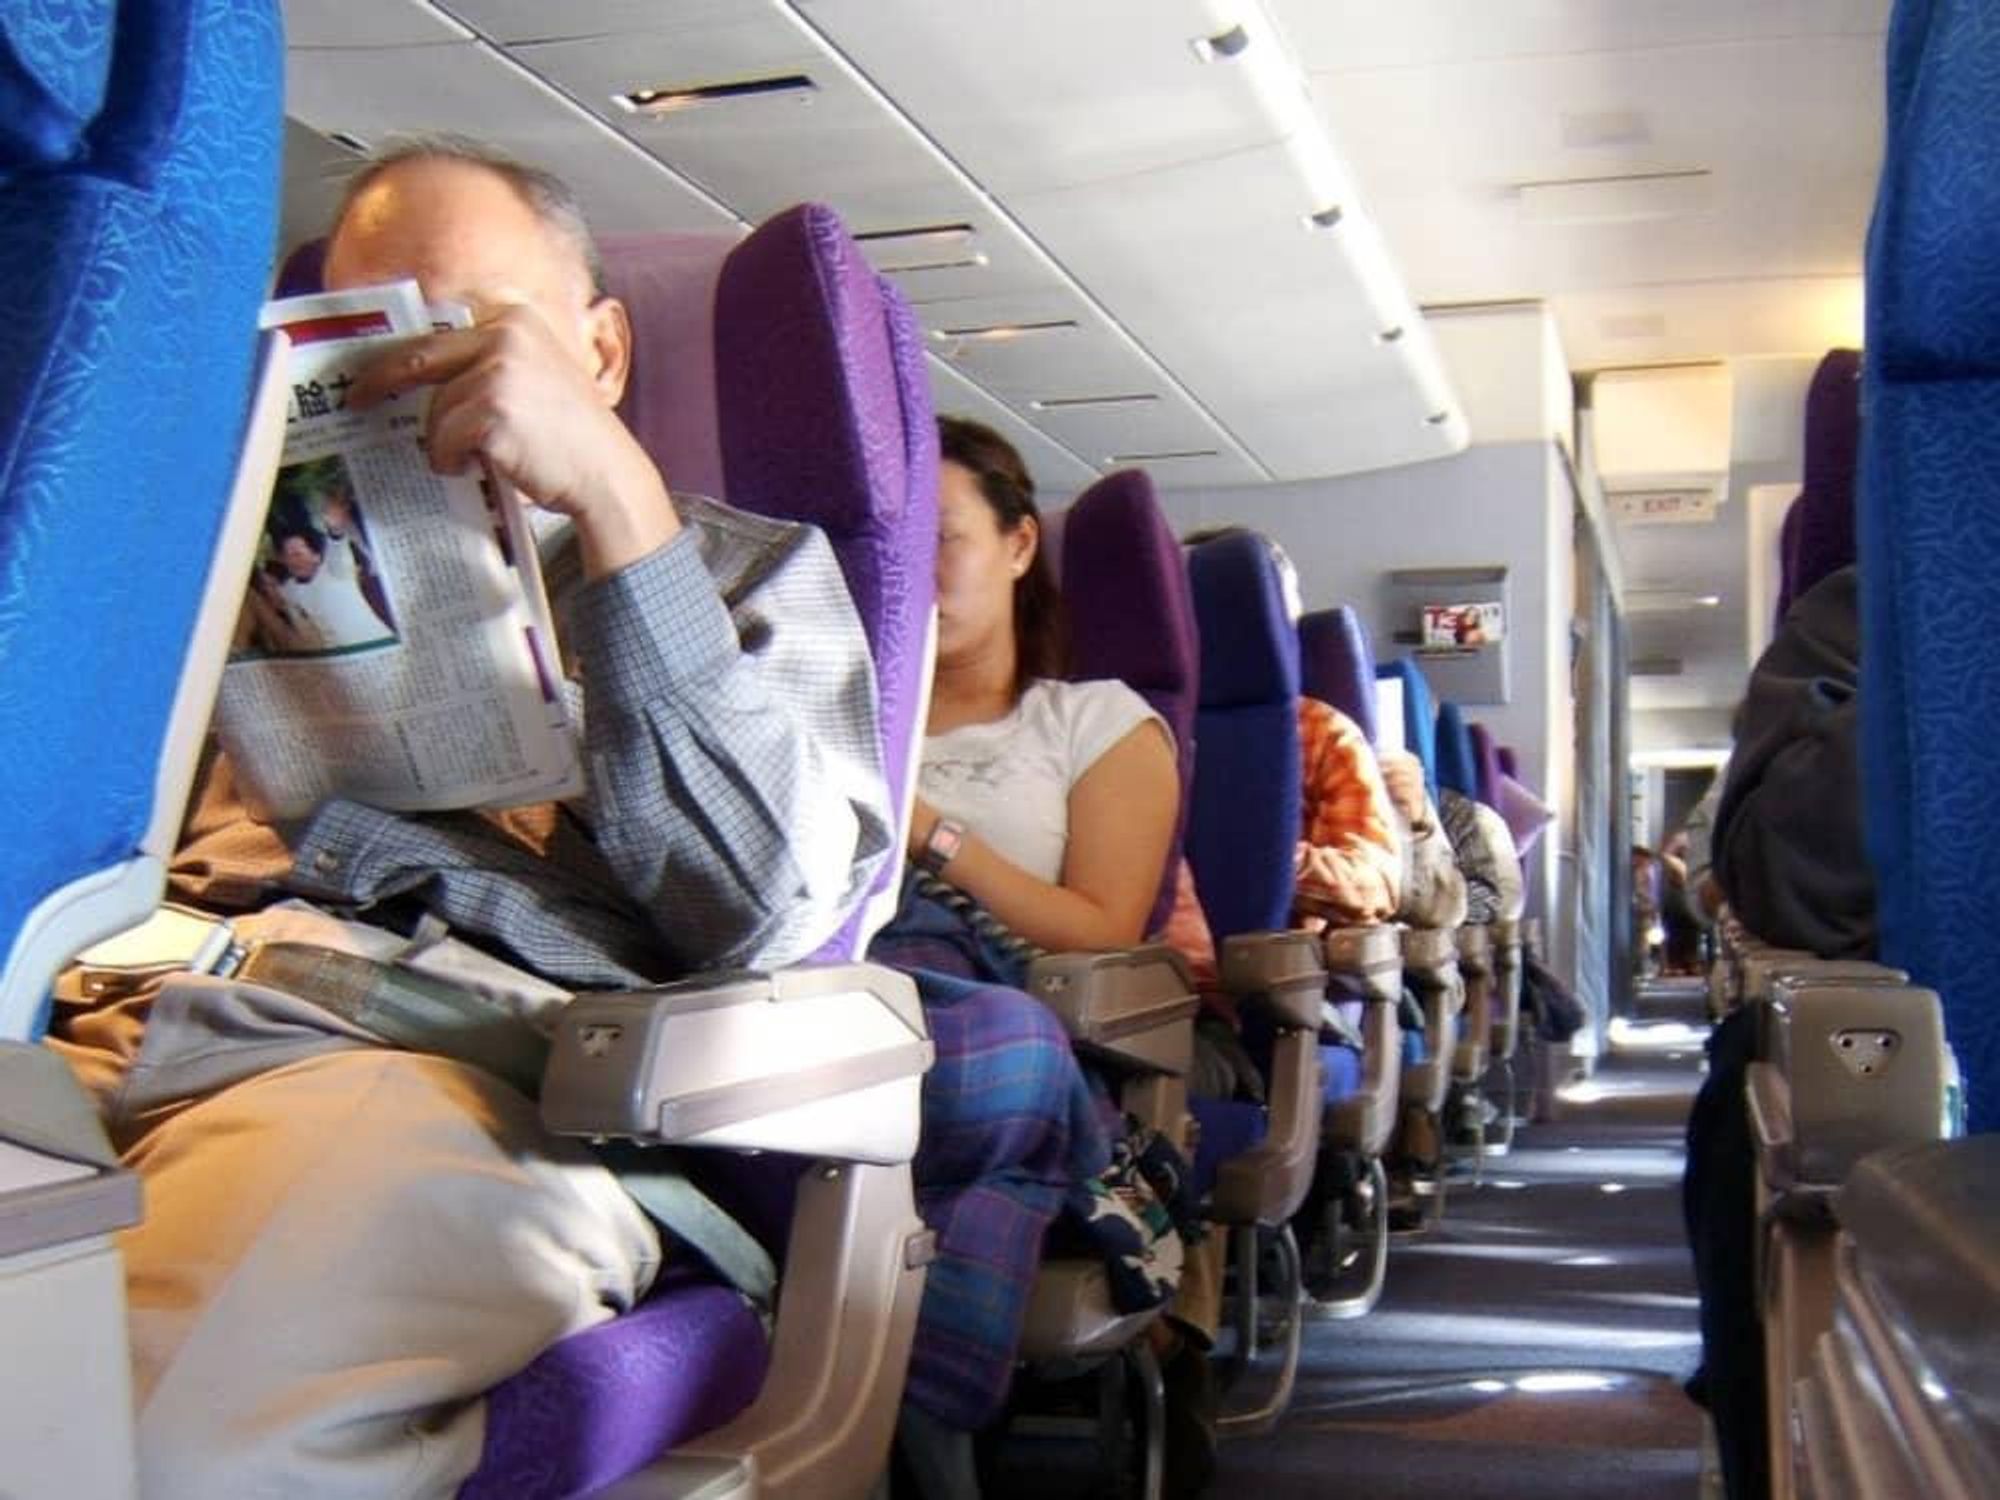 News_airplane_crowded_seats